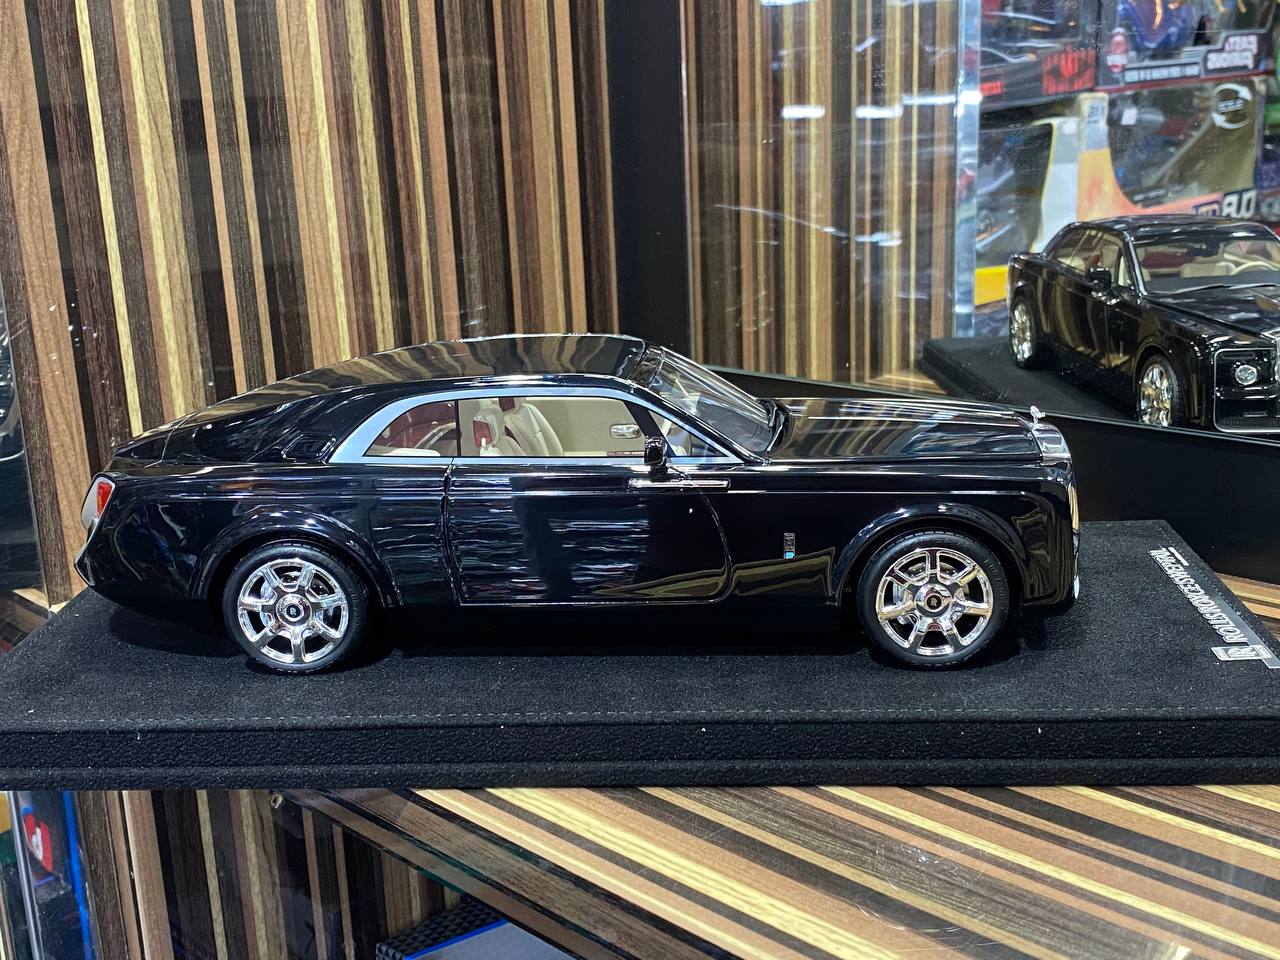 AutoBarnModels Rolls-Royce SWEPTAIL - 1/18 Resin Model, Black|Sold in Dturman.com Dubai UAE.